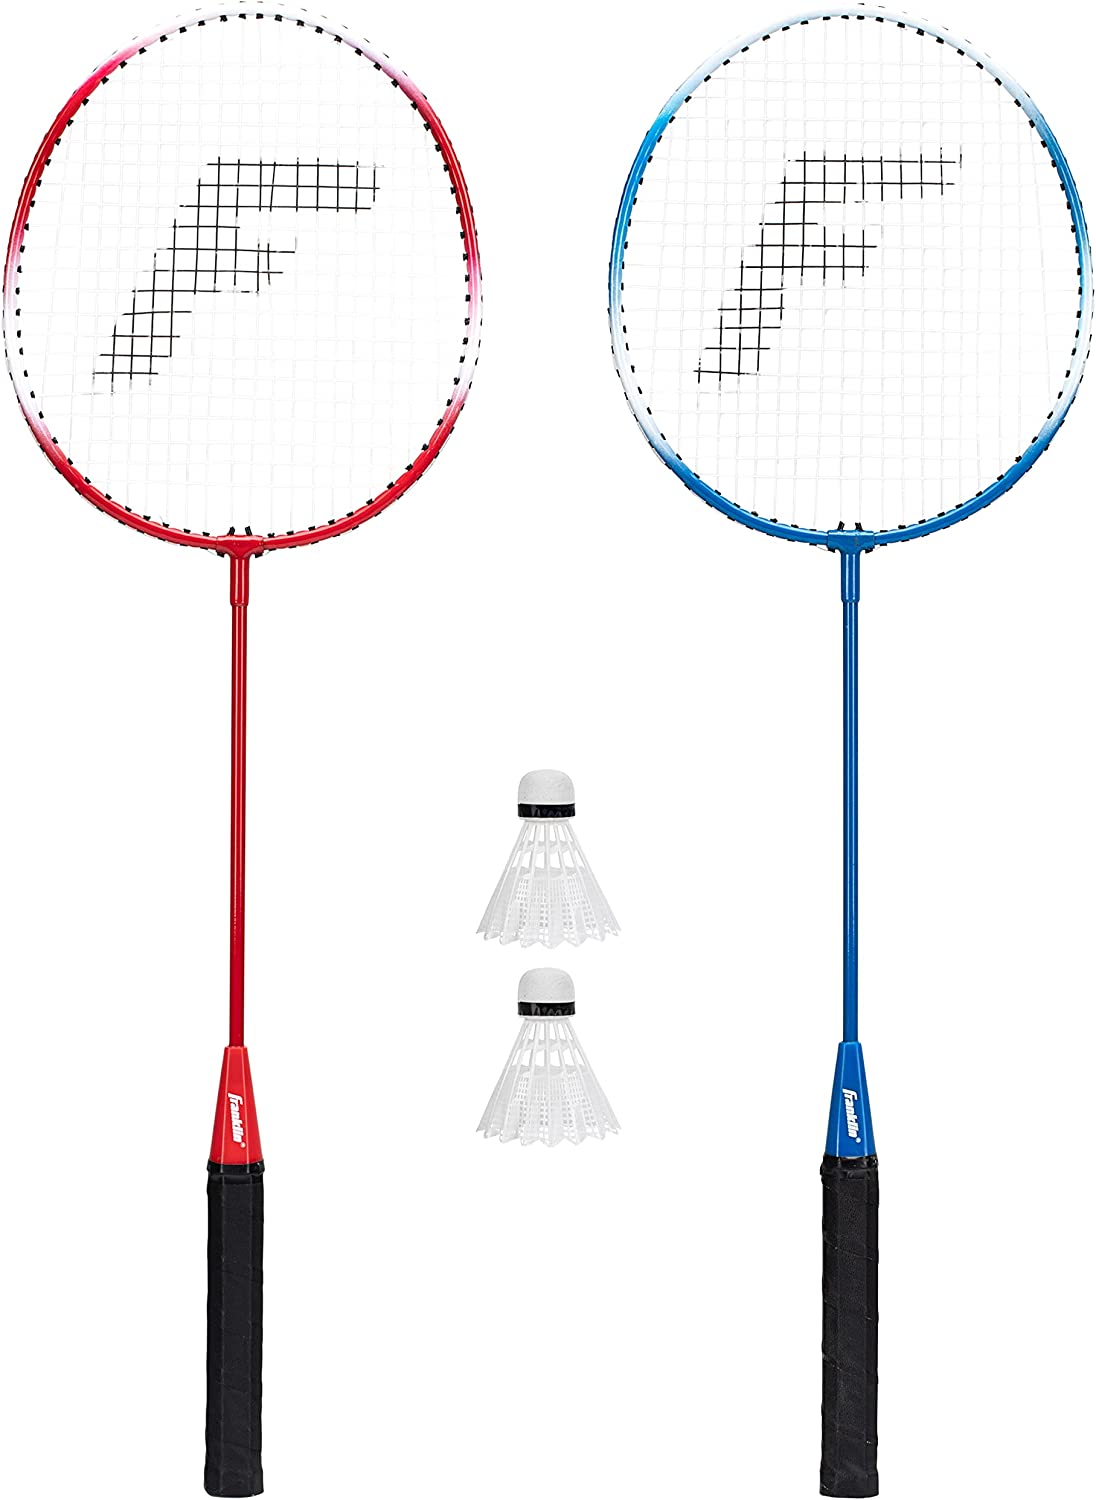 2 badminton rackets and 2 birdies